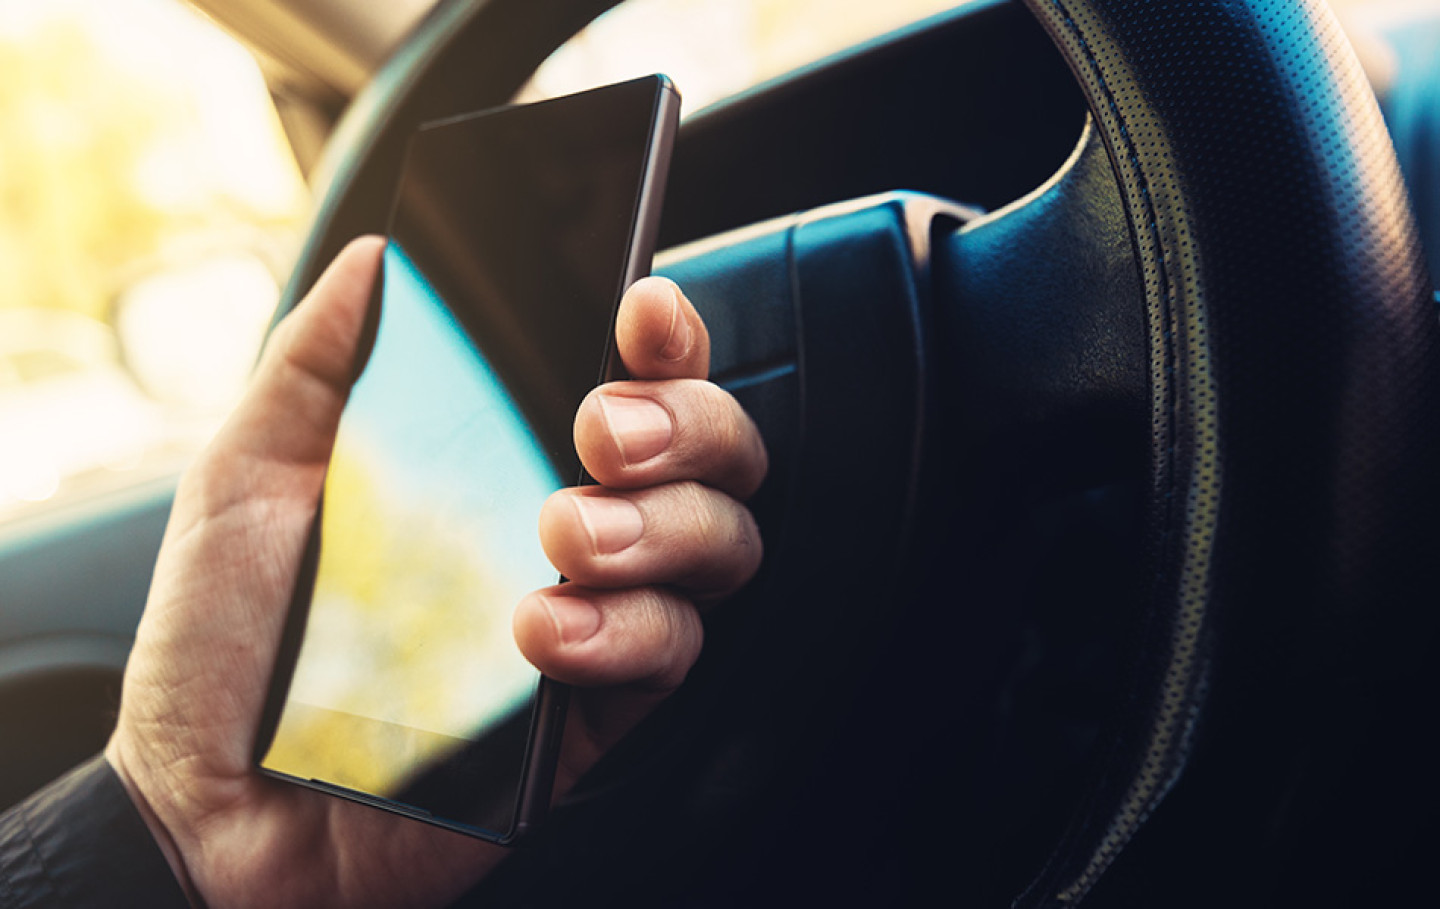 break-phone-driving-habit